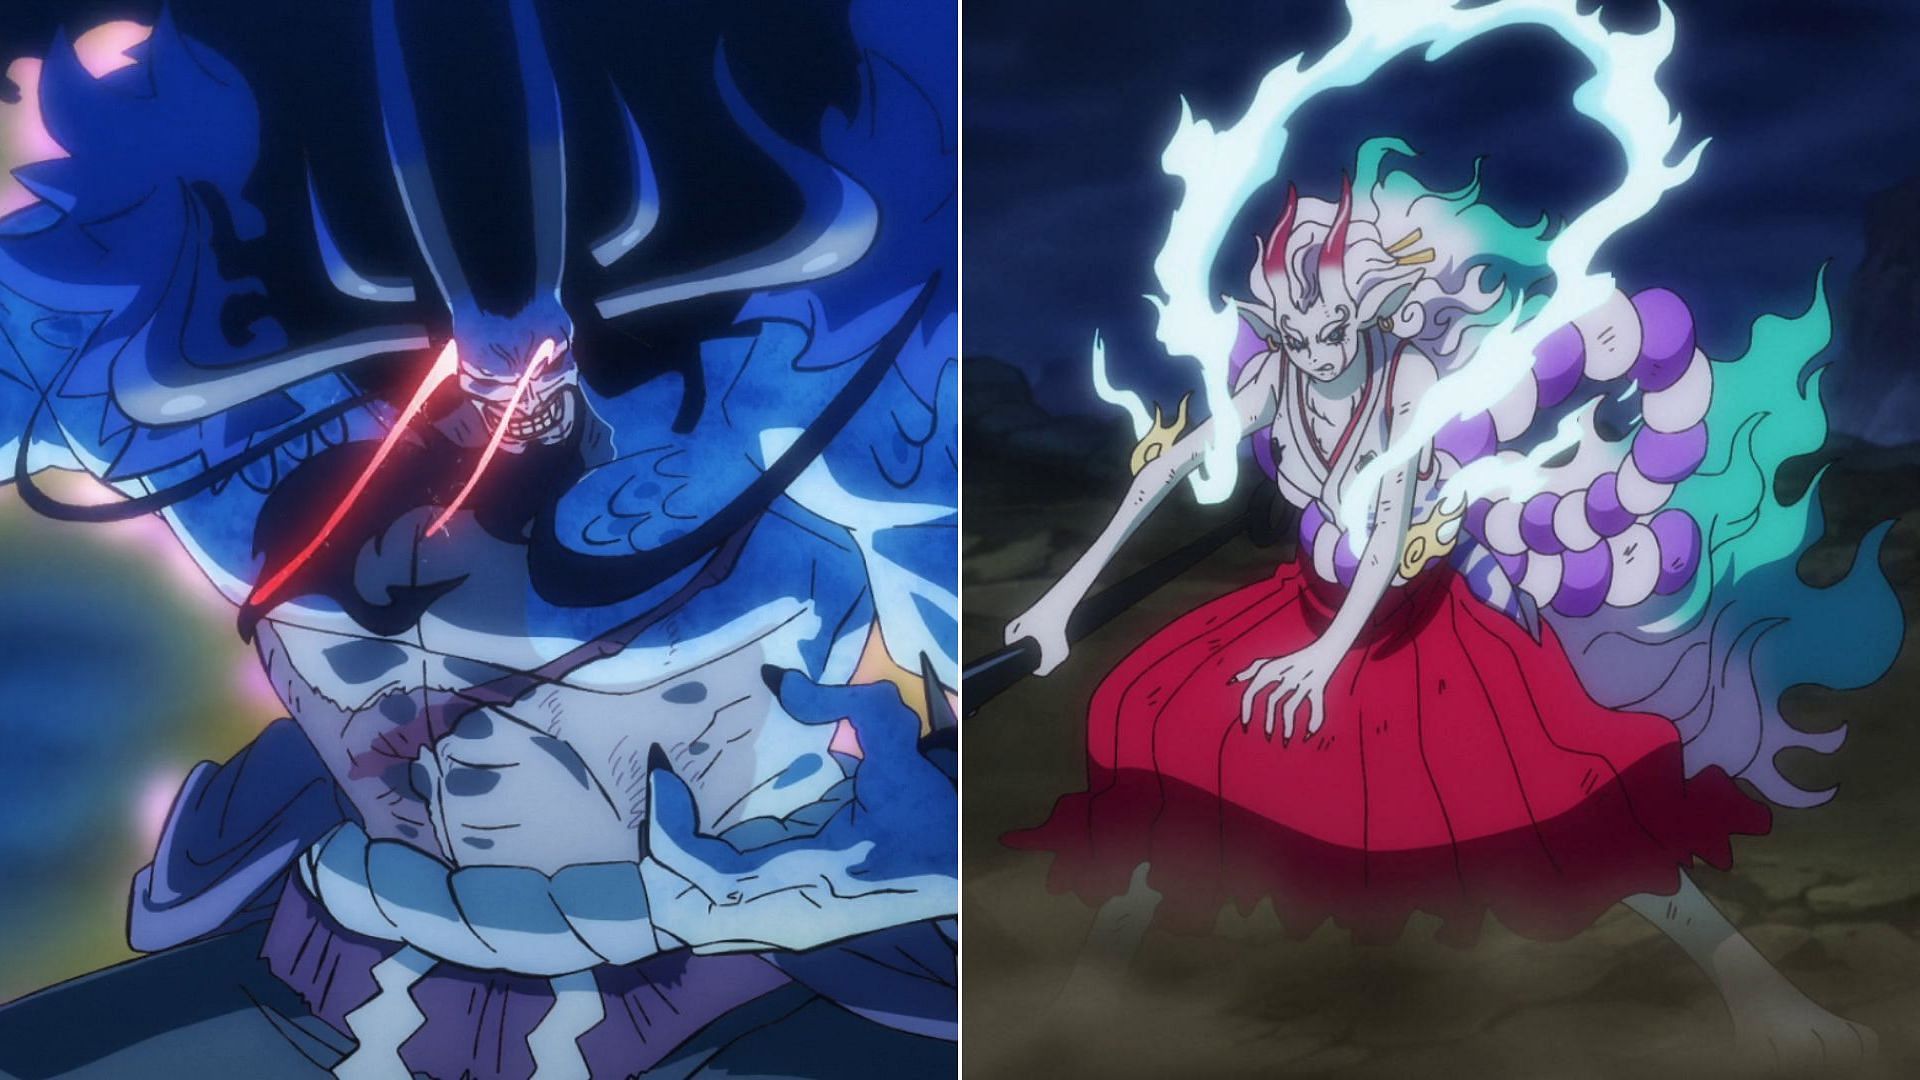 Kaido vs Yamato as seen in One Piece (Image via Toei Animation, One Piece)